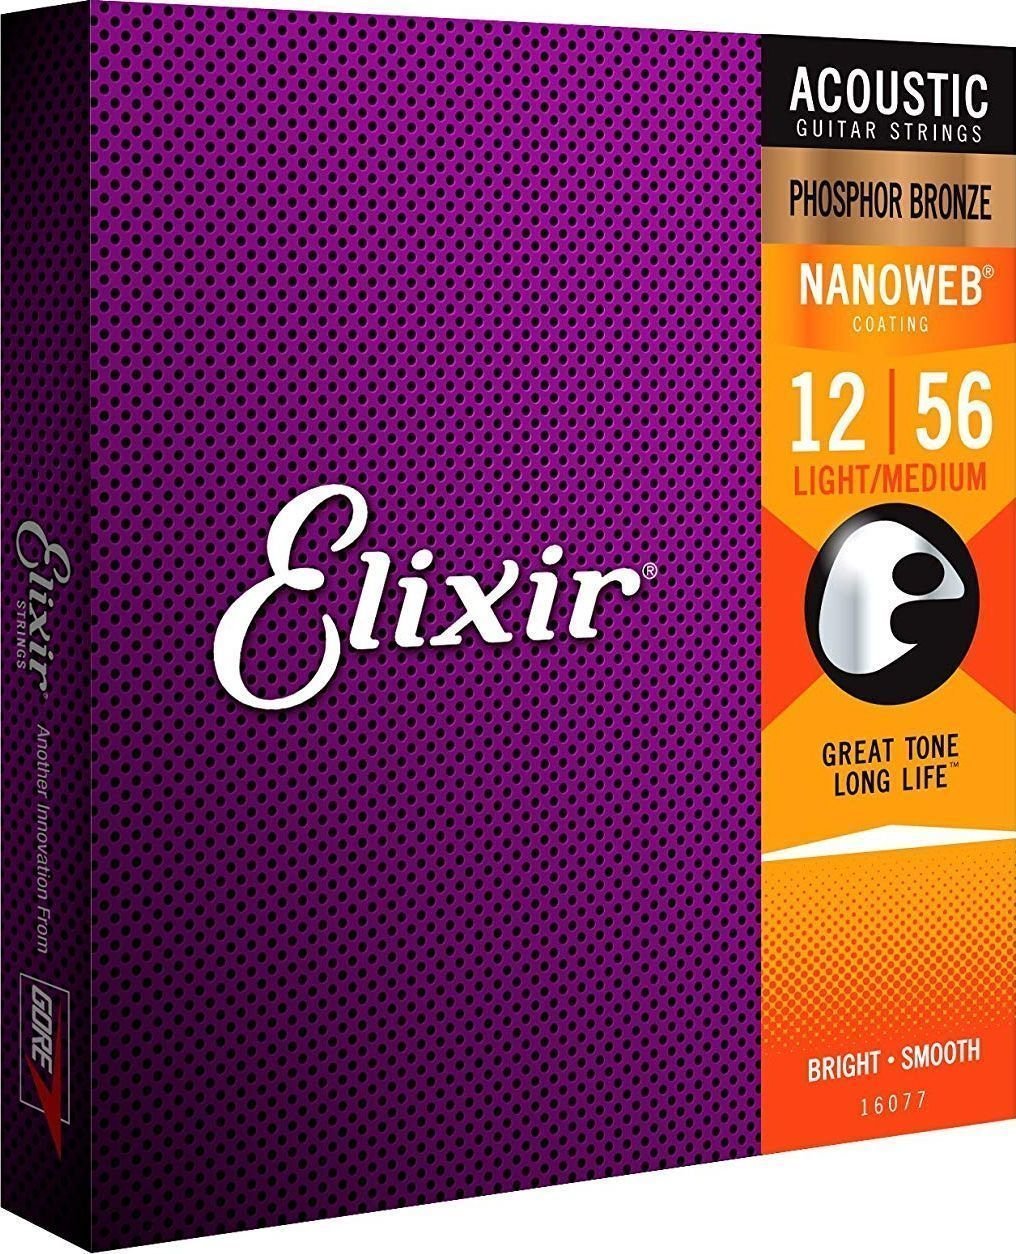 Guitar strings Elixir 16077 Nanoweb 12-56